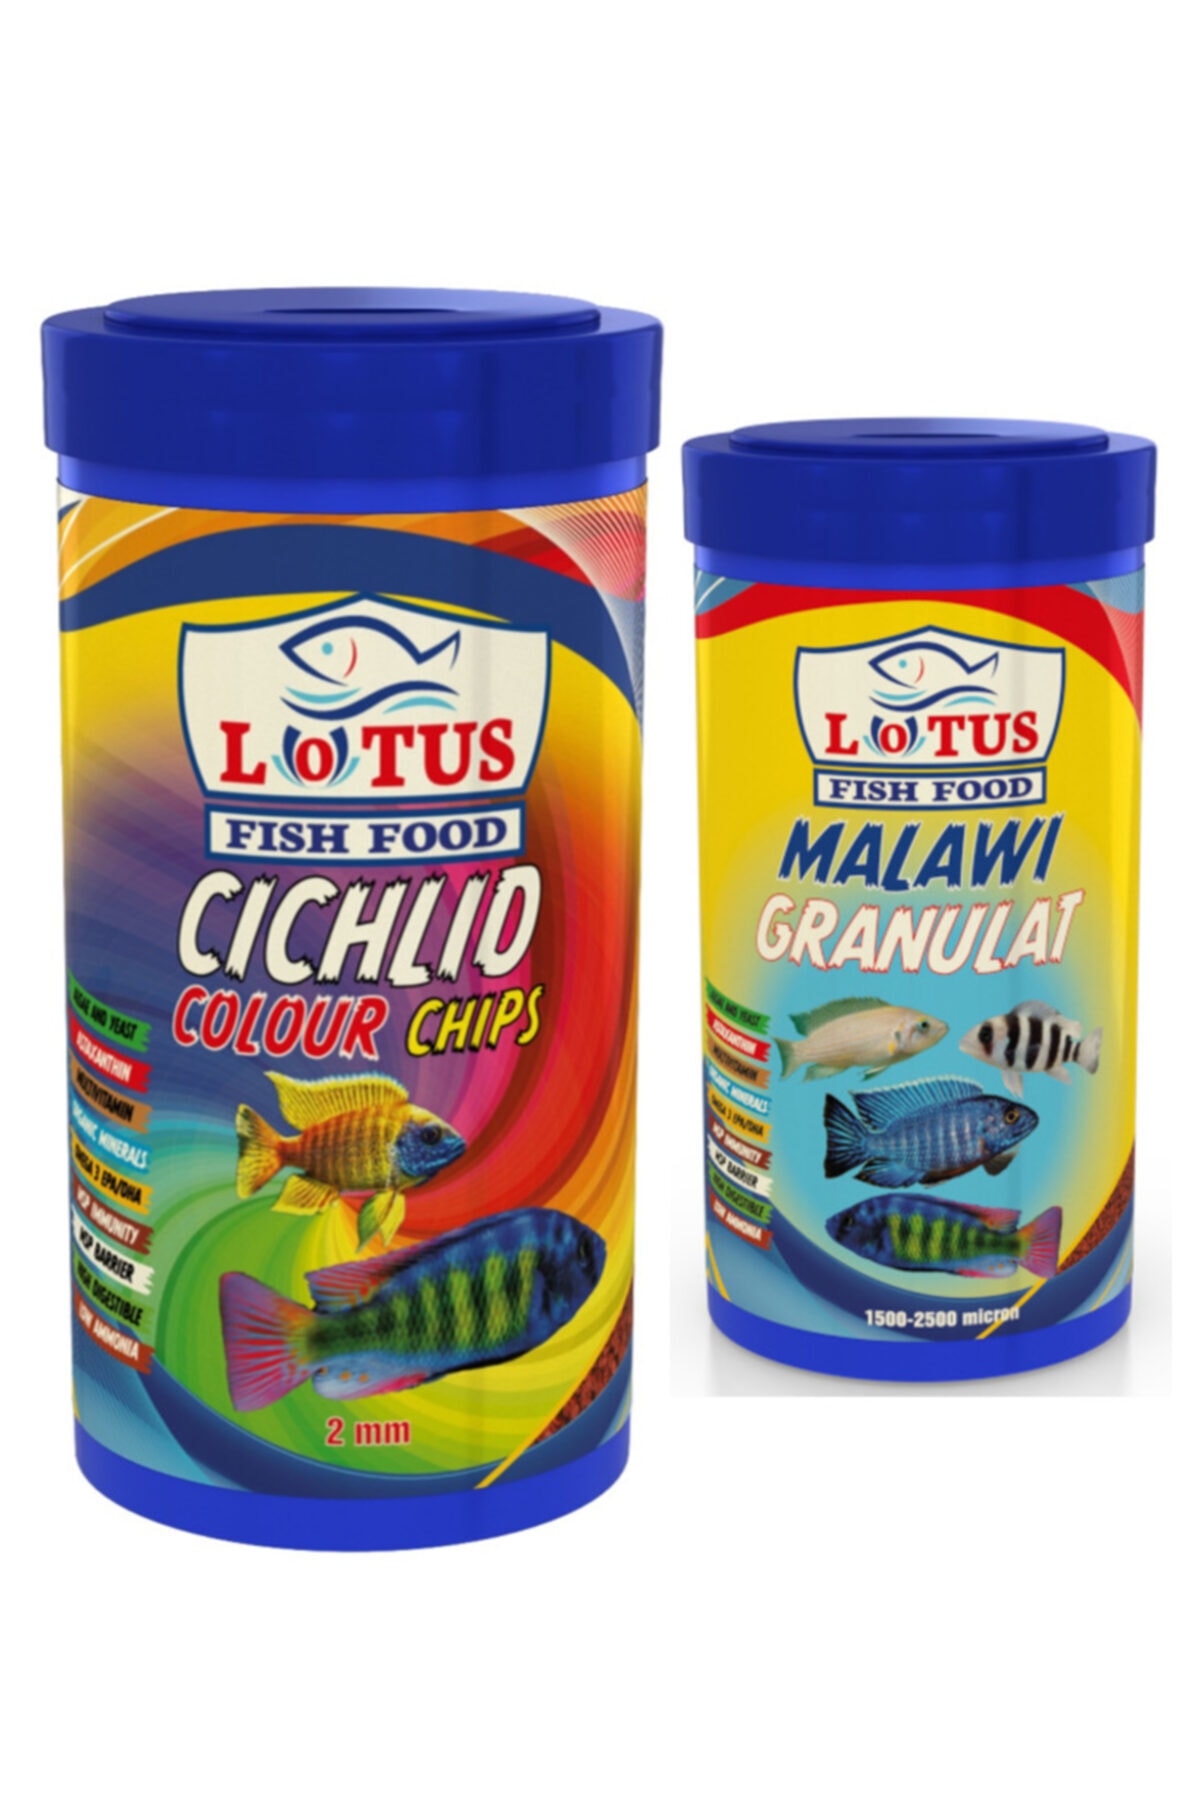 Lotus Cichlid Colour Chips 1000 Ml Ve Malawi Granulat 250 Ml Balık Yemi